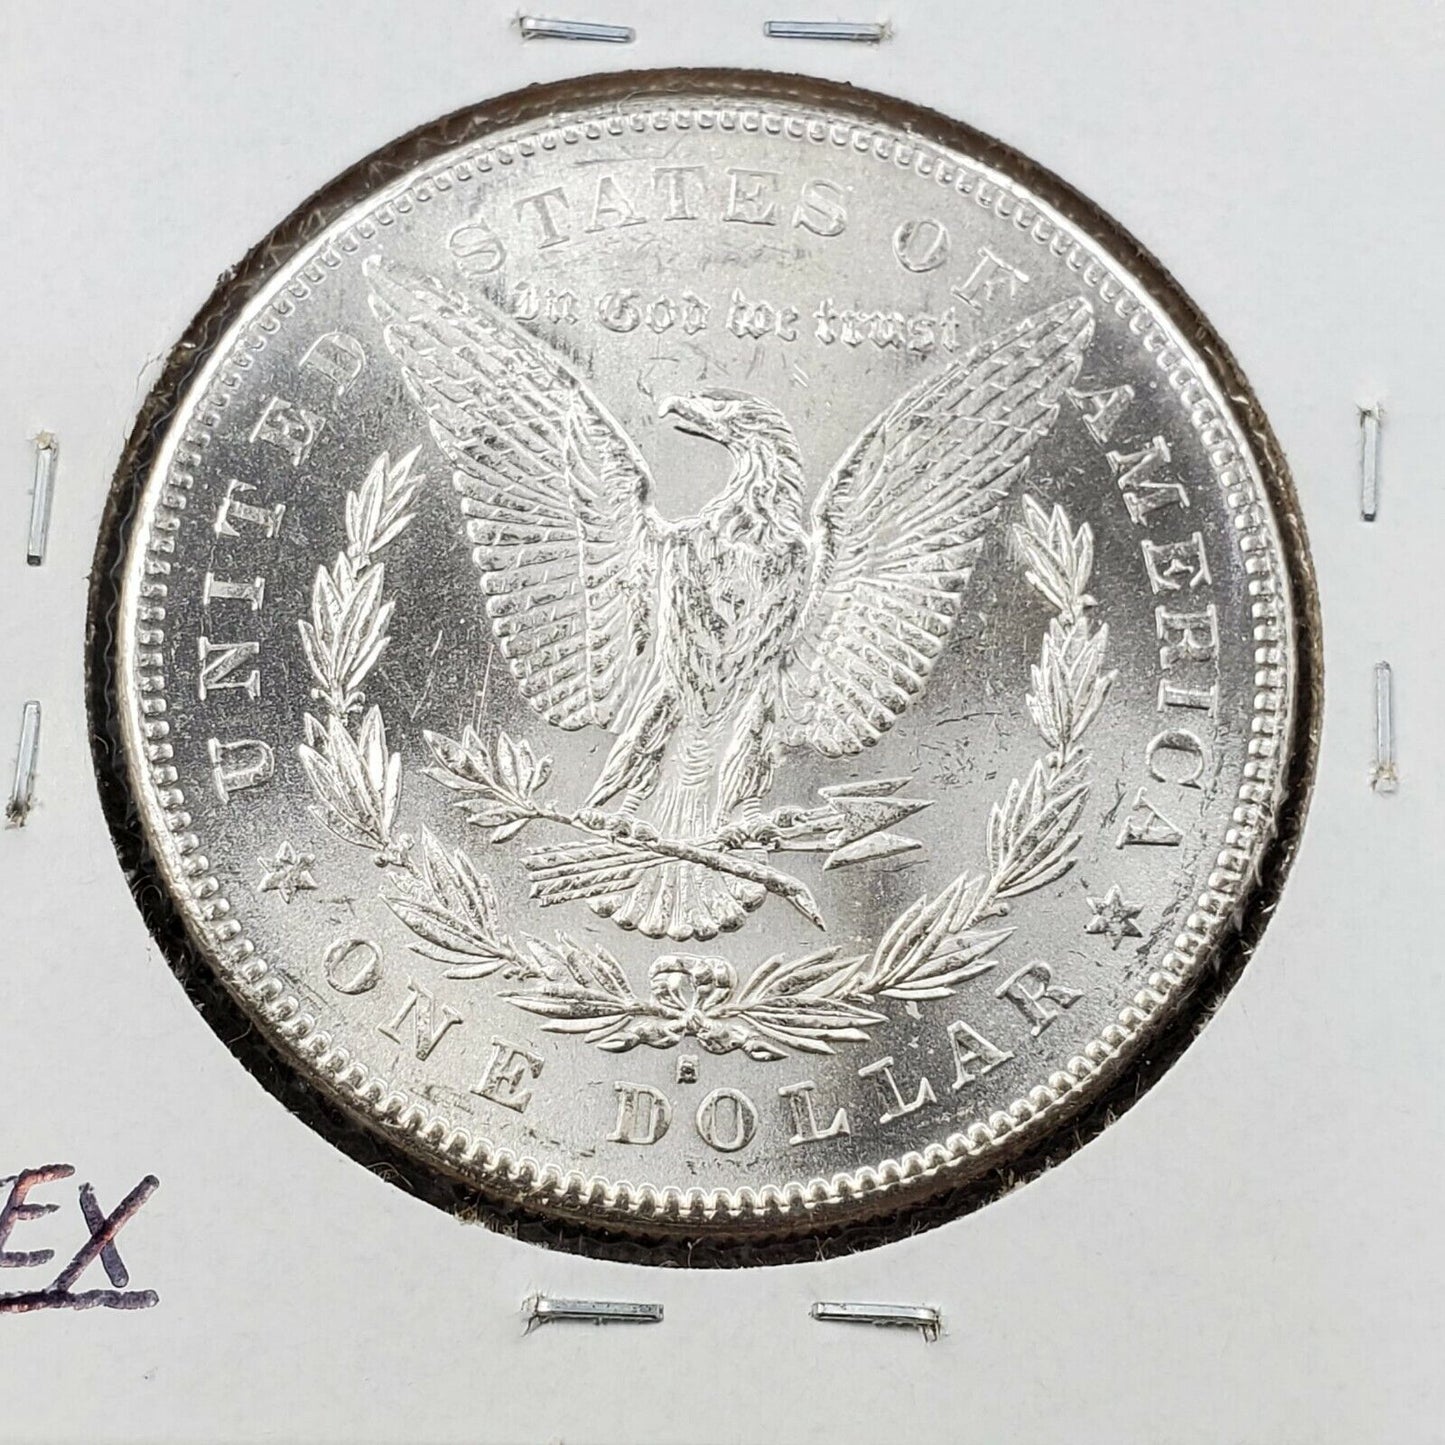 1878 S $1 Morgan Silver Dollar Coin BU Uncirculated Die Chips on Mint Mark VAM